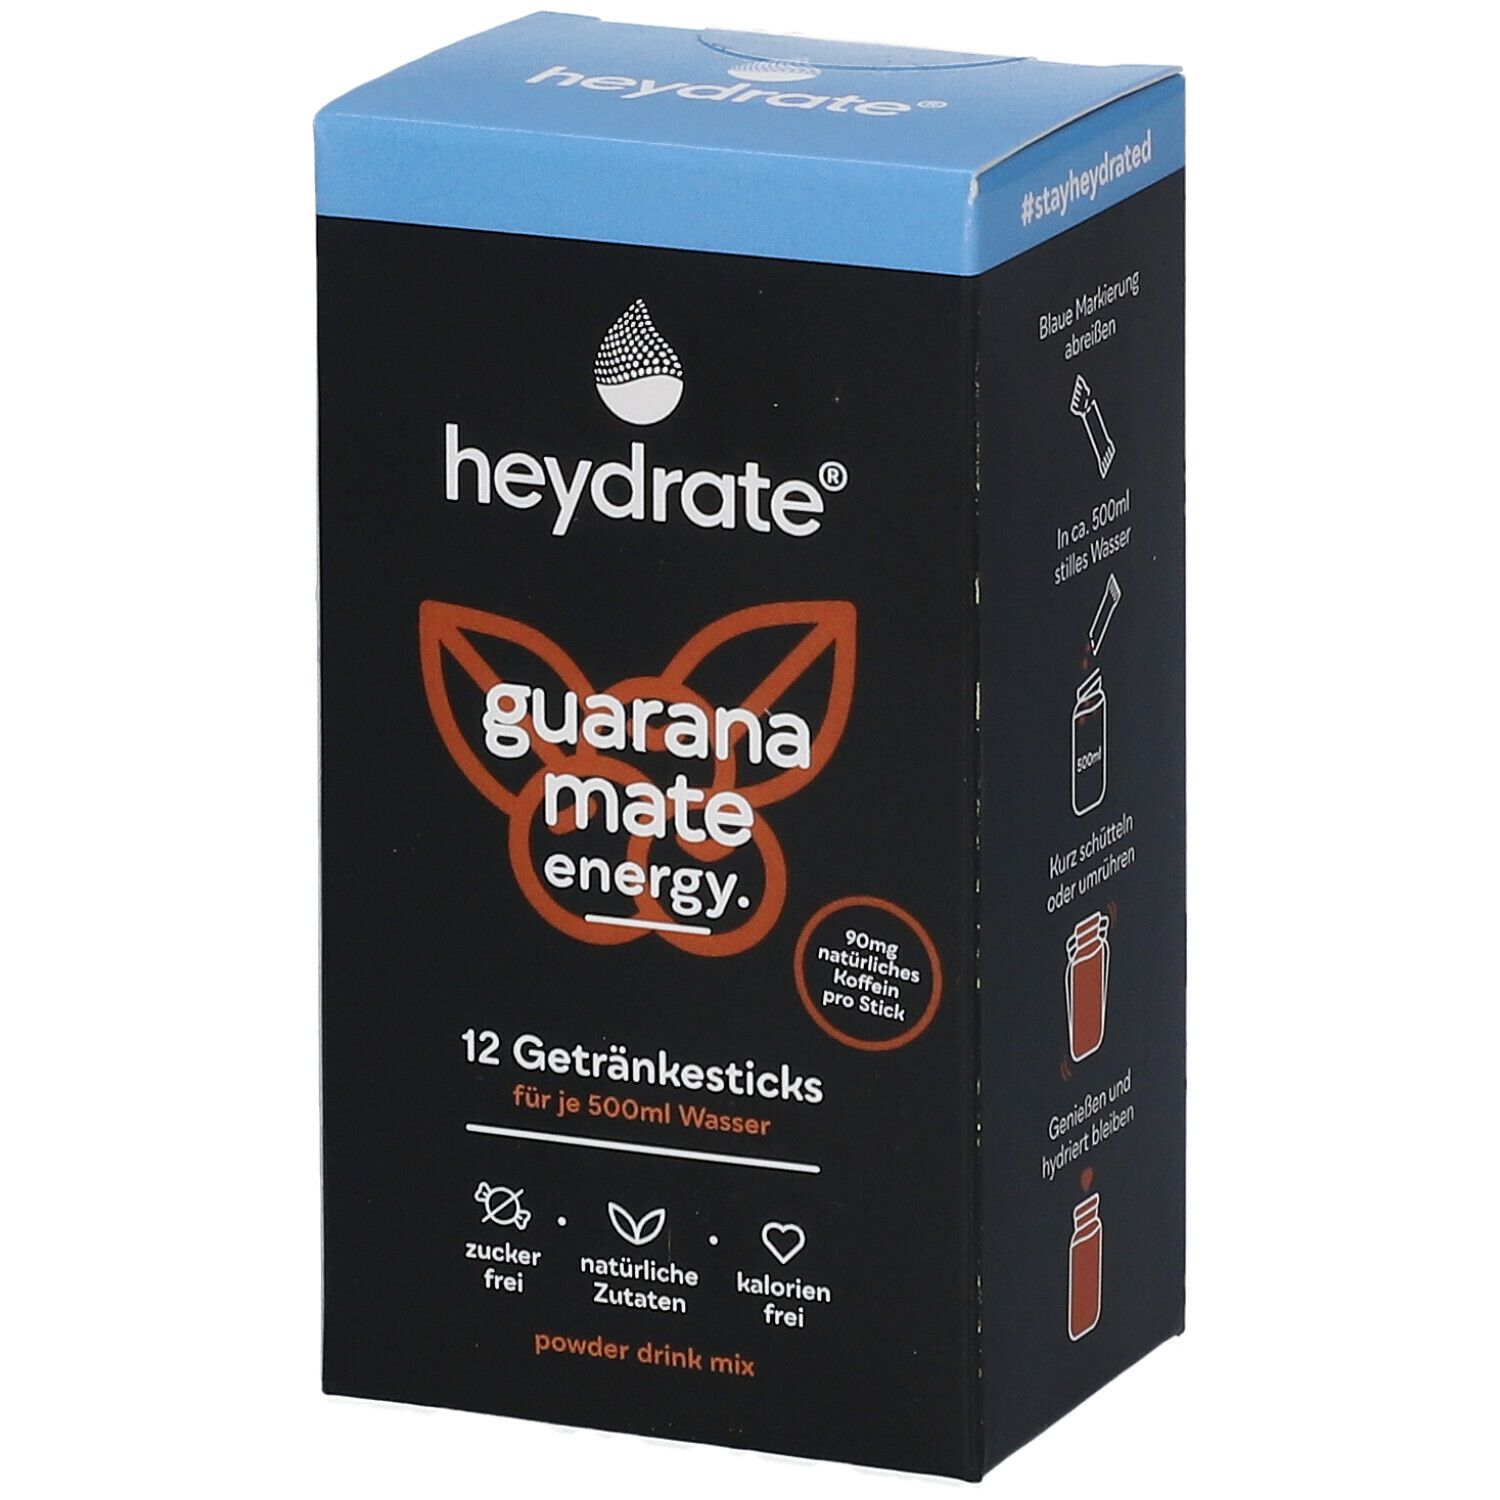 Image of heydrate® guarana mate energy